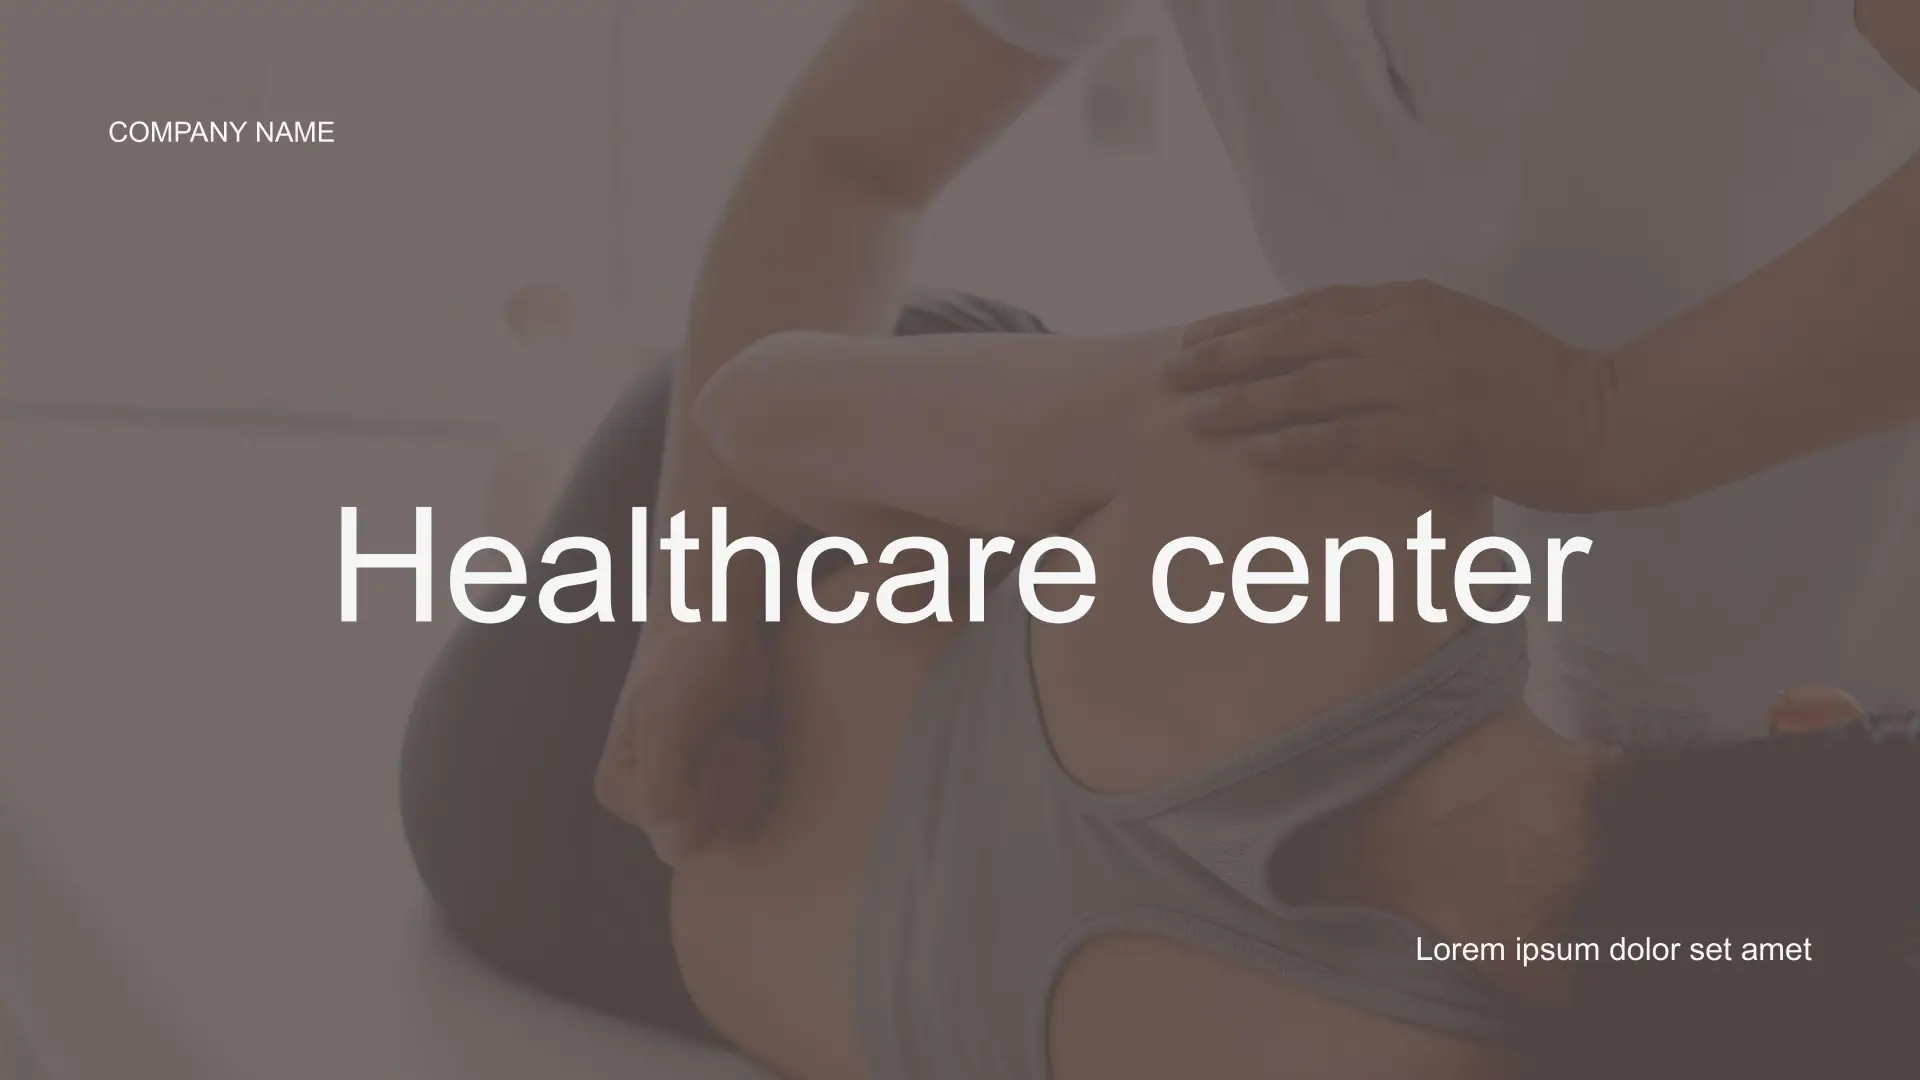 Healthcare Center Template for Google Slides